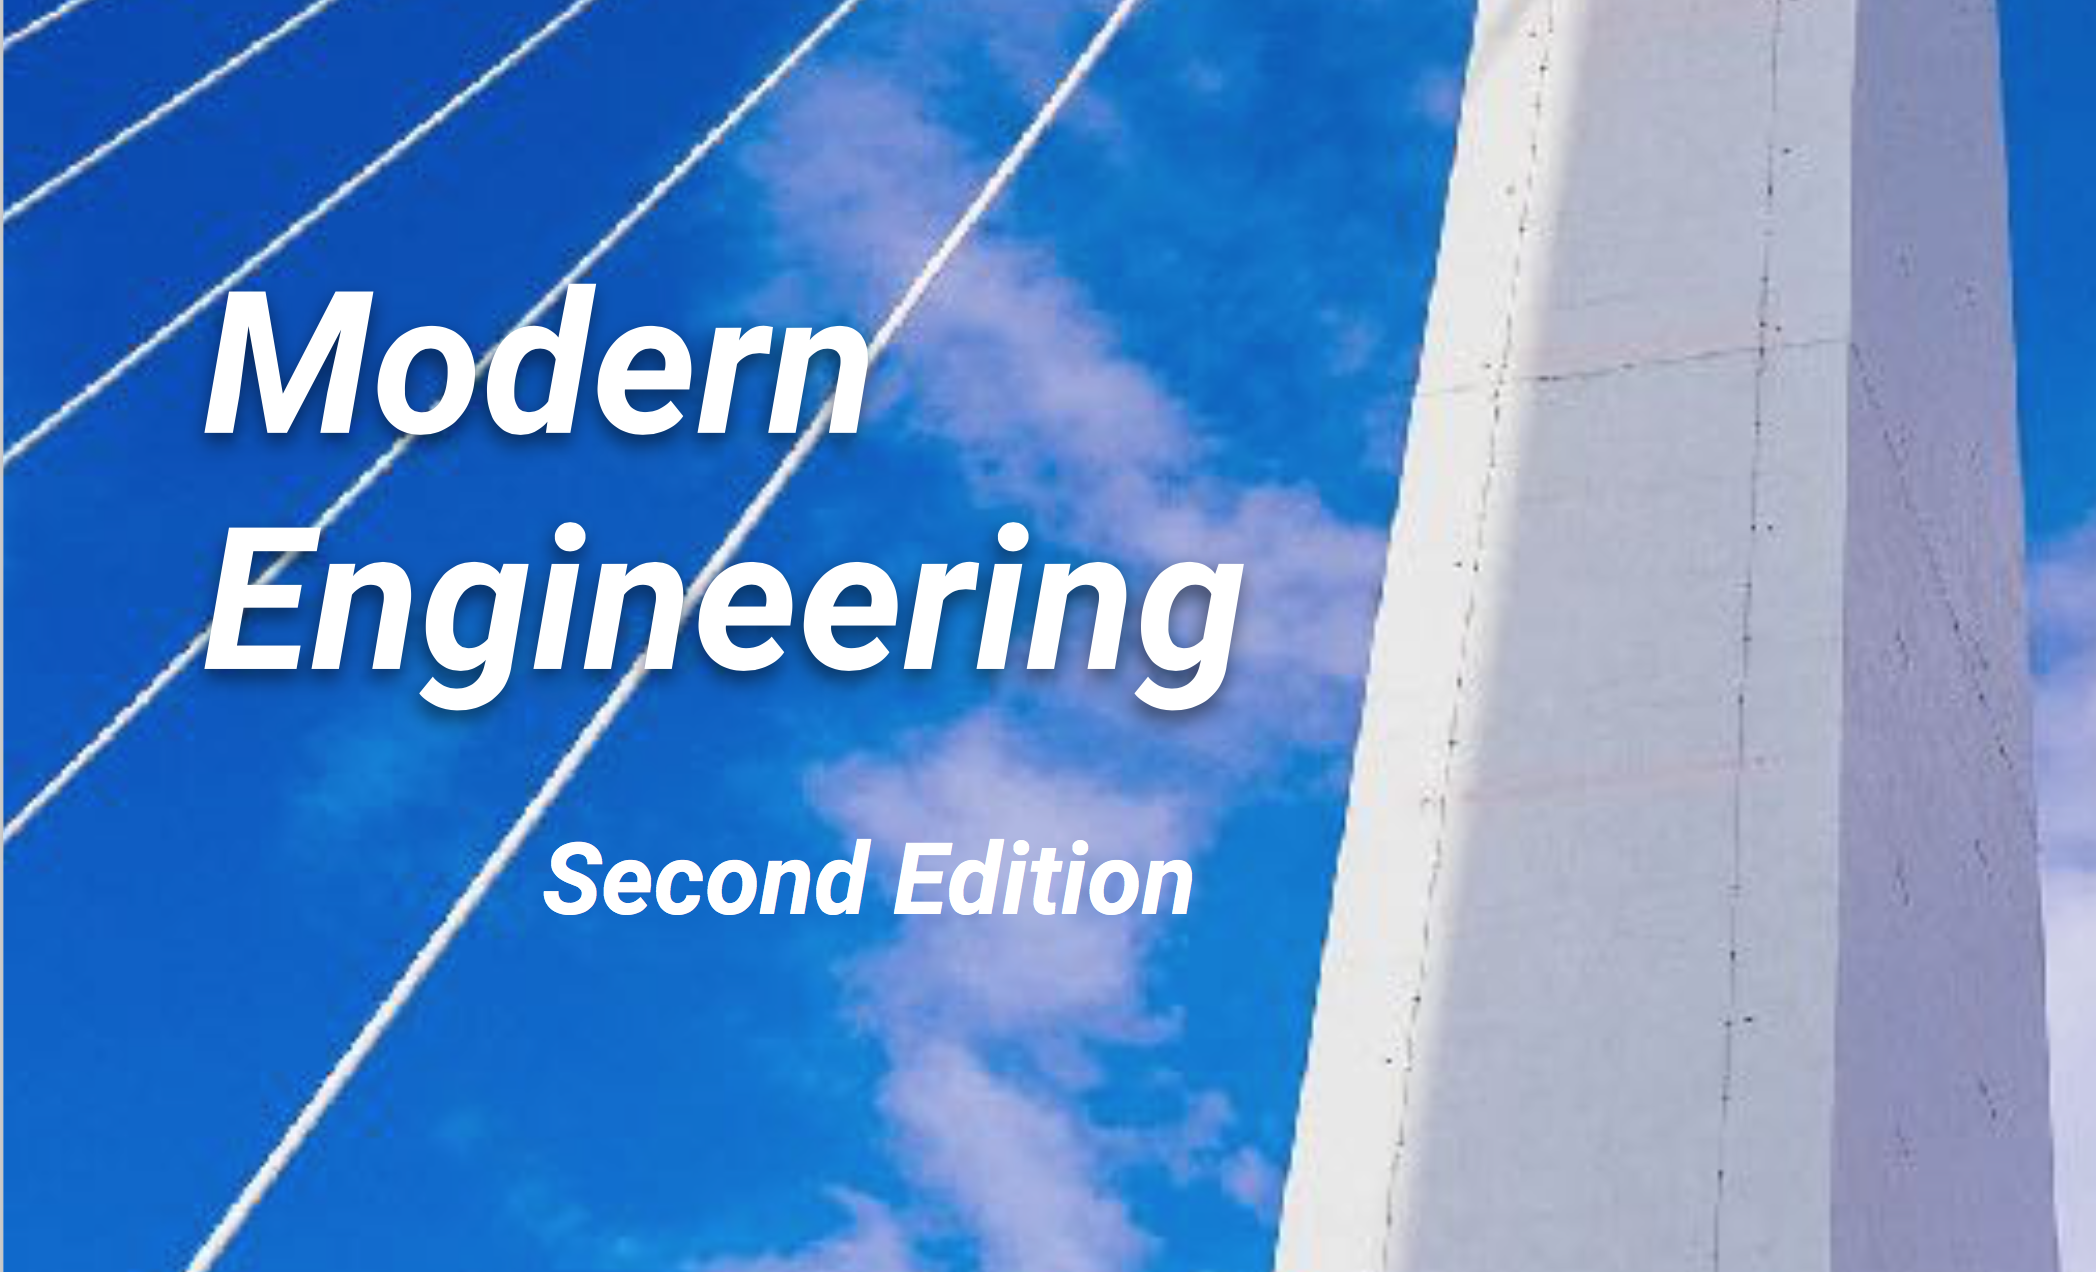 Modern Engineering Textbook